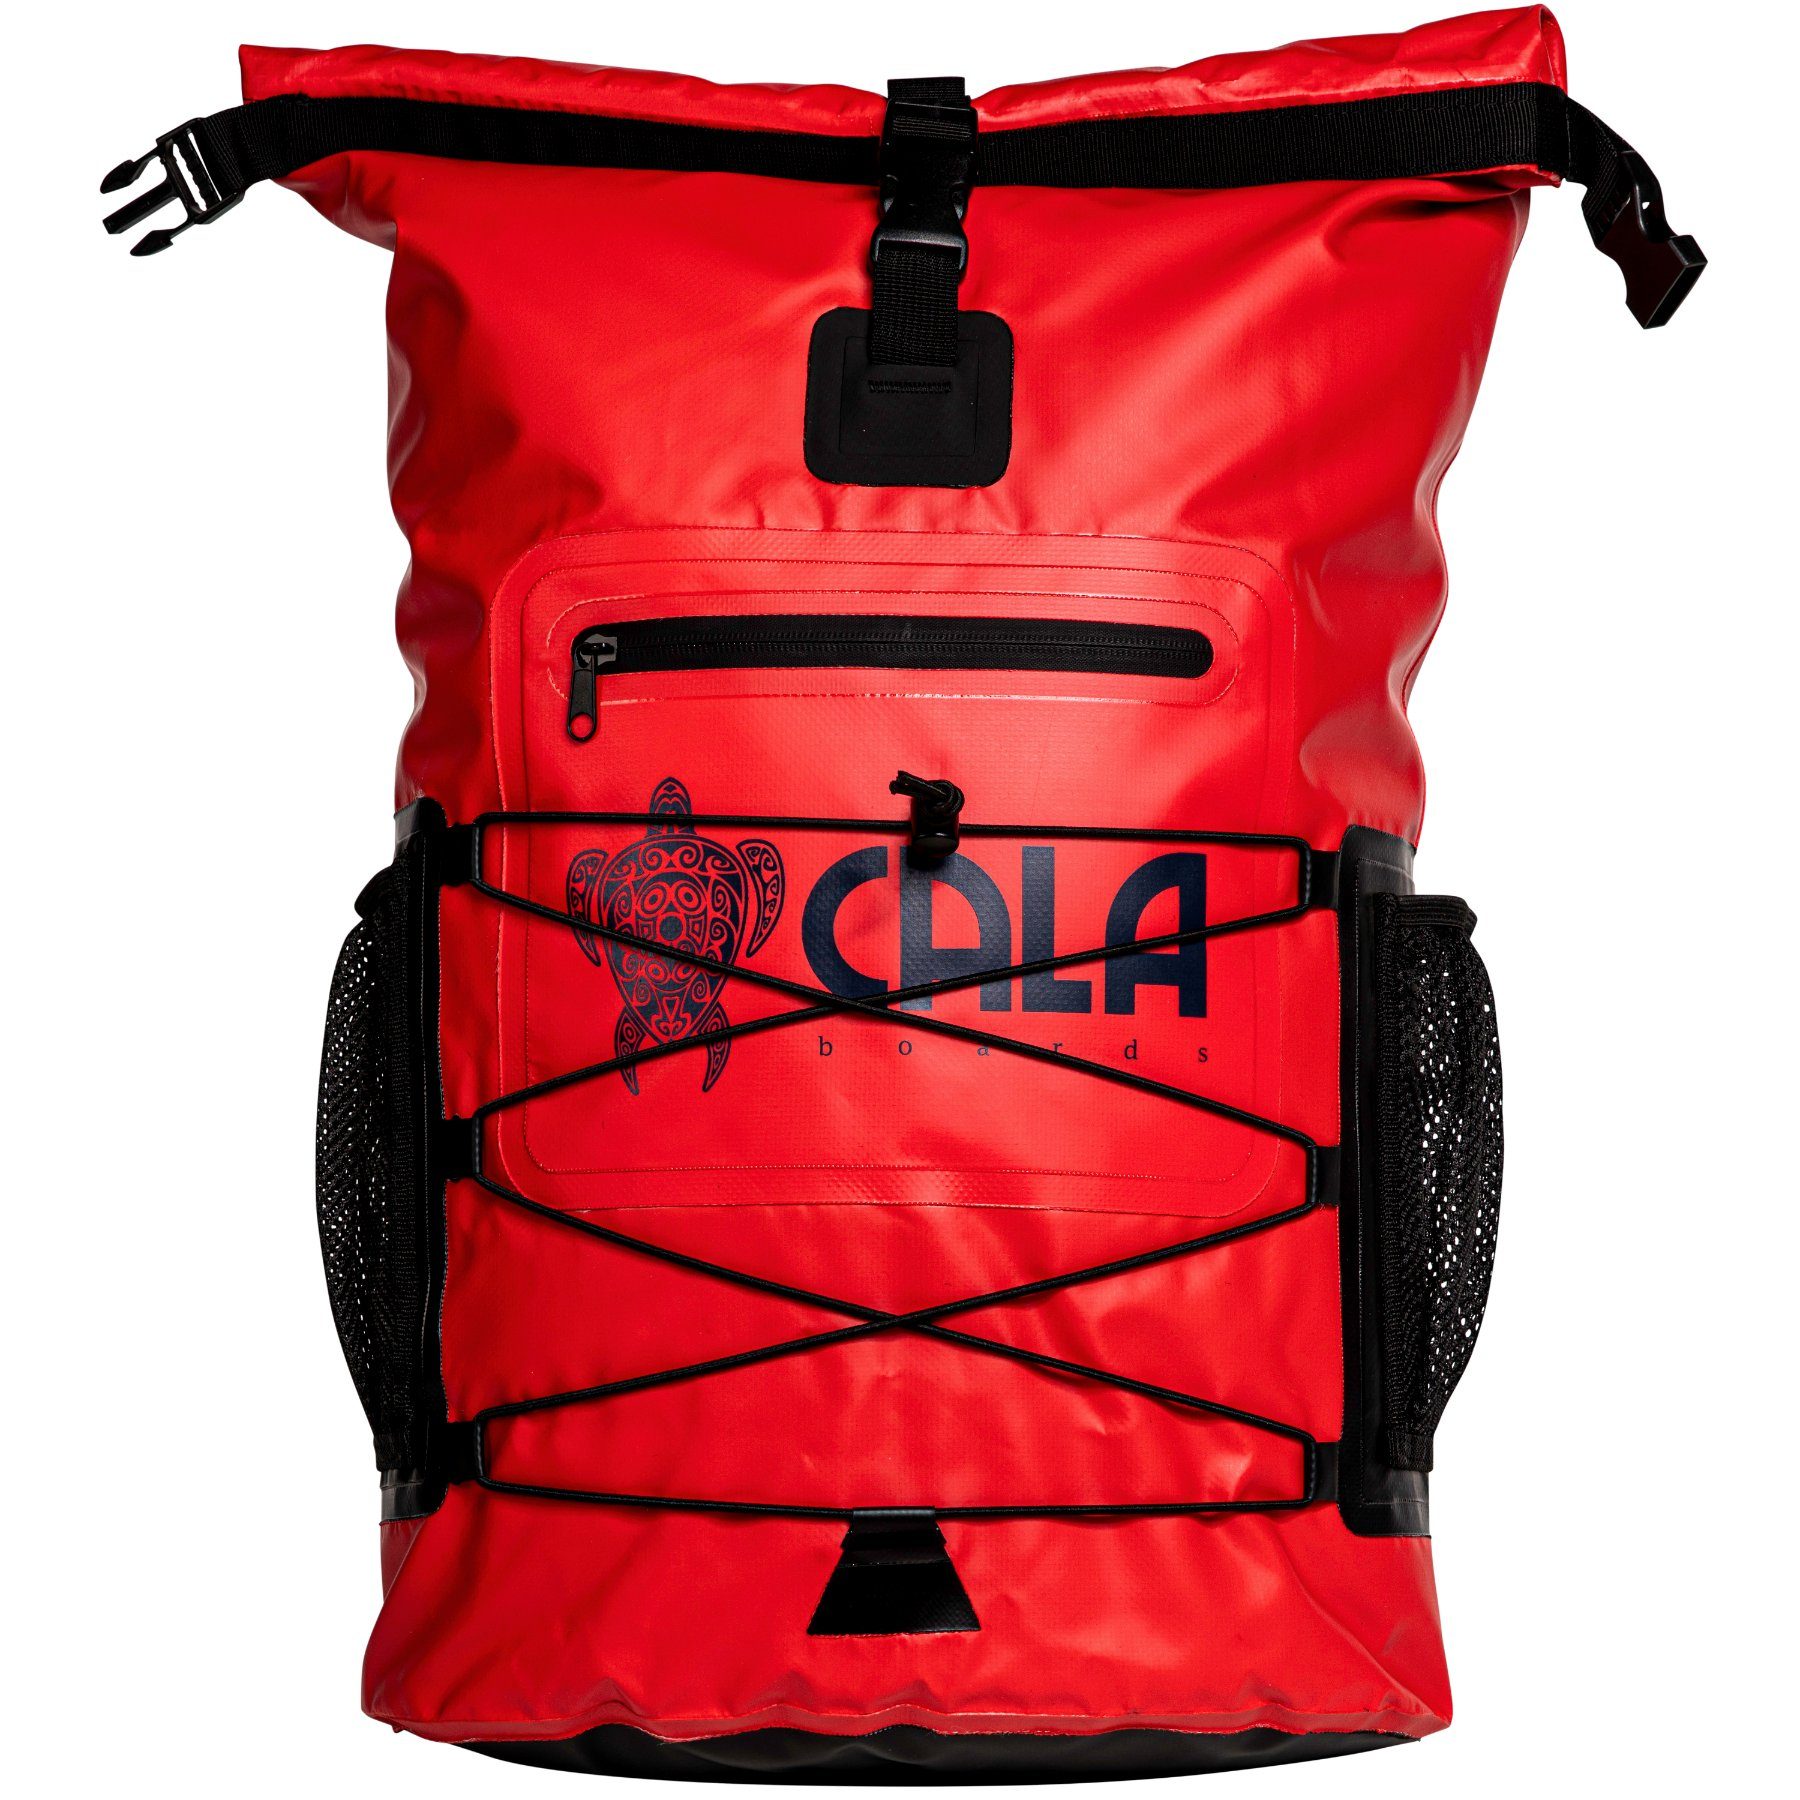 Backpack Dry UV-beständigem waterproof Rucksack Backpack und robustem wasserdicht, Drybag 30L, PVC, 30l, Rot CALA Rucksack